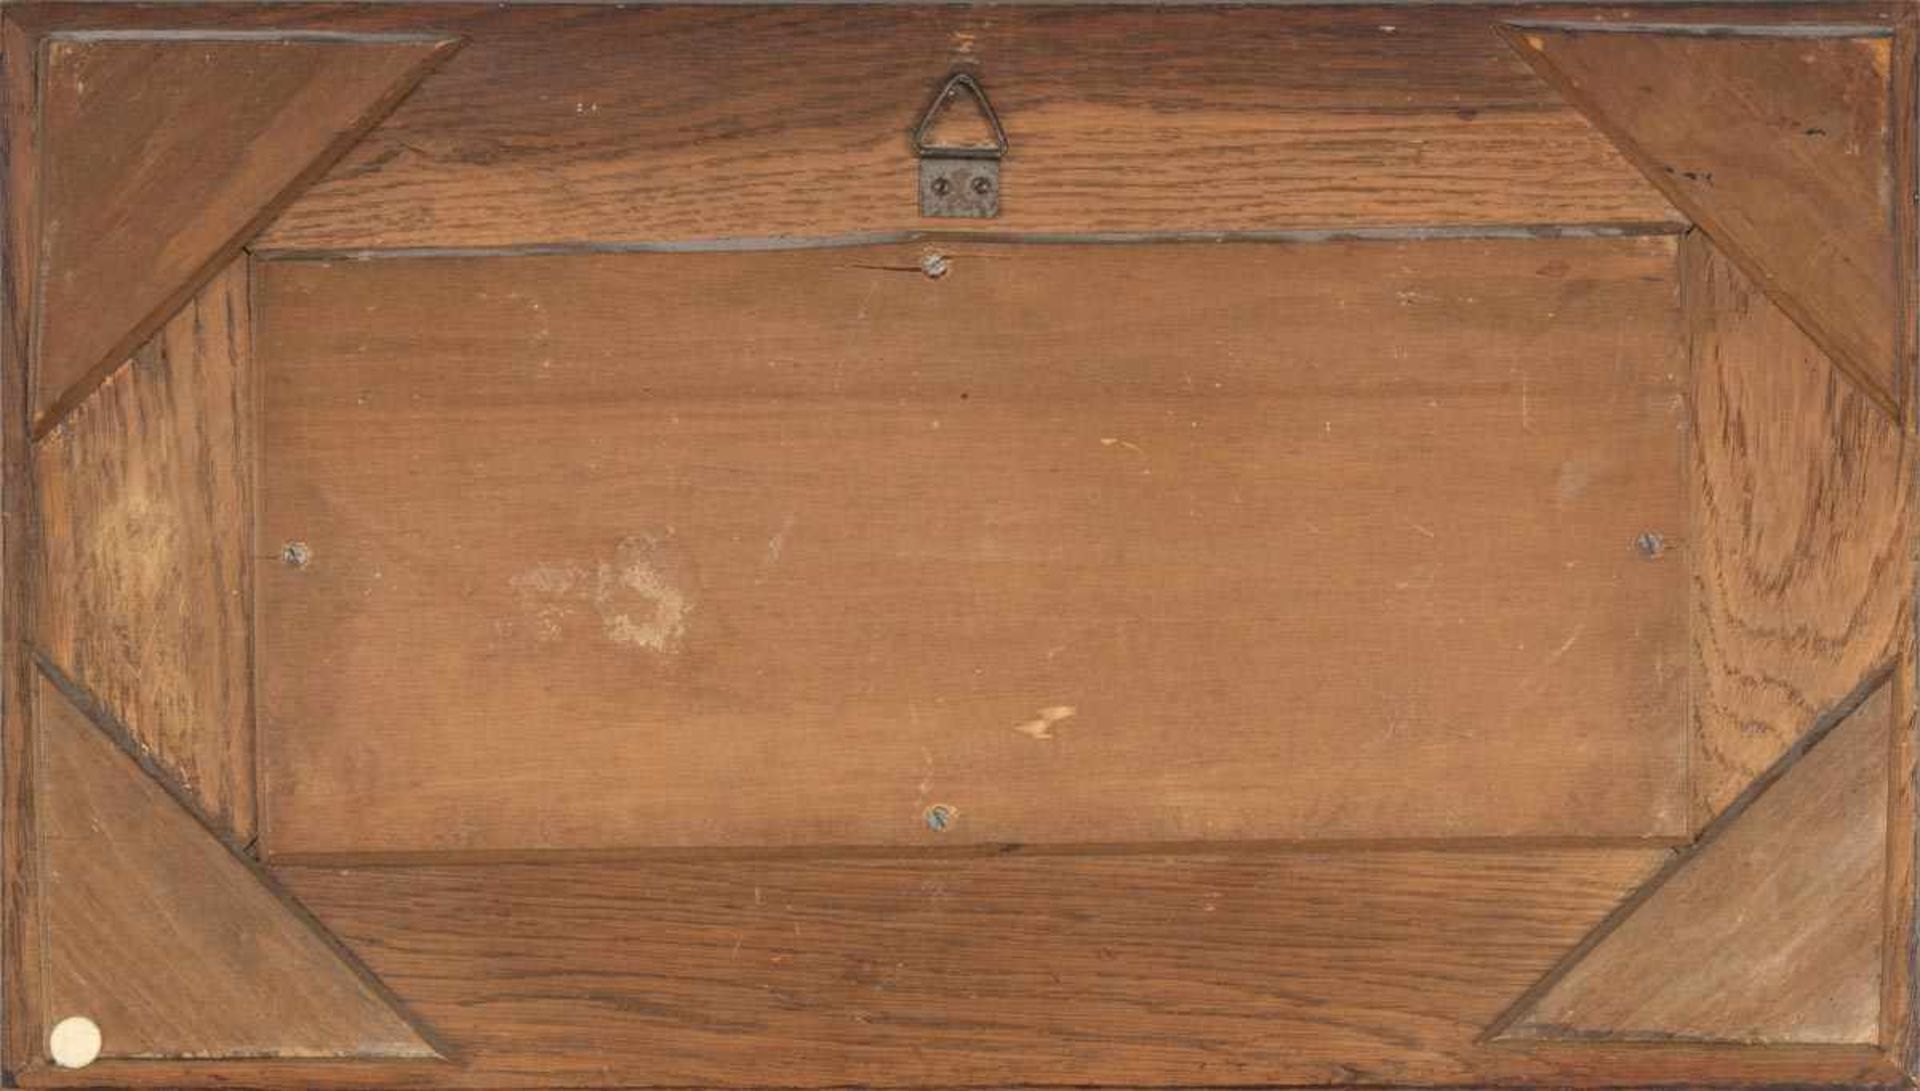 Gerahmte Kachel in Delfter Manier, um 1900/20. Kachel ca. 10 x 30 cm. Rahmen beigegeben, max. - Image 4 of 4